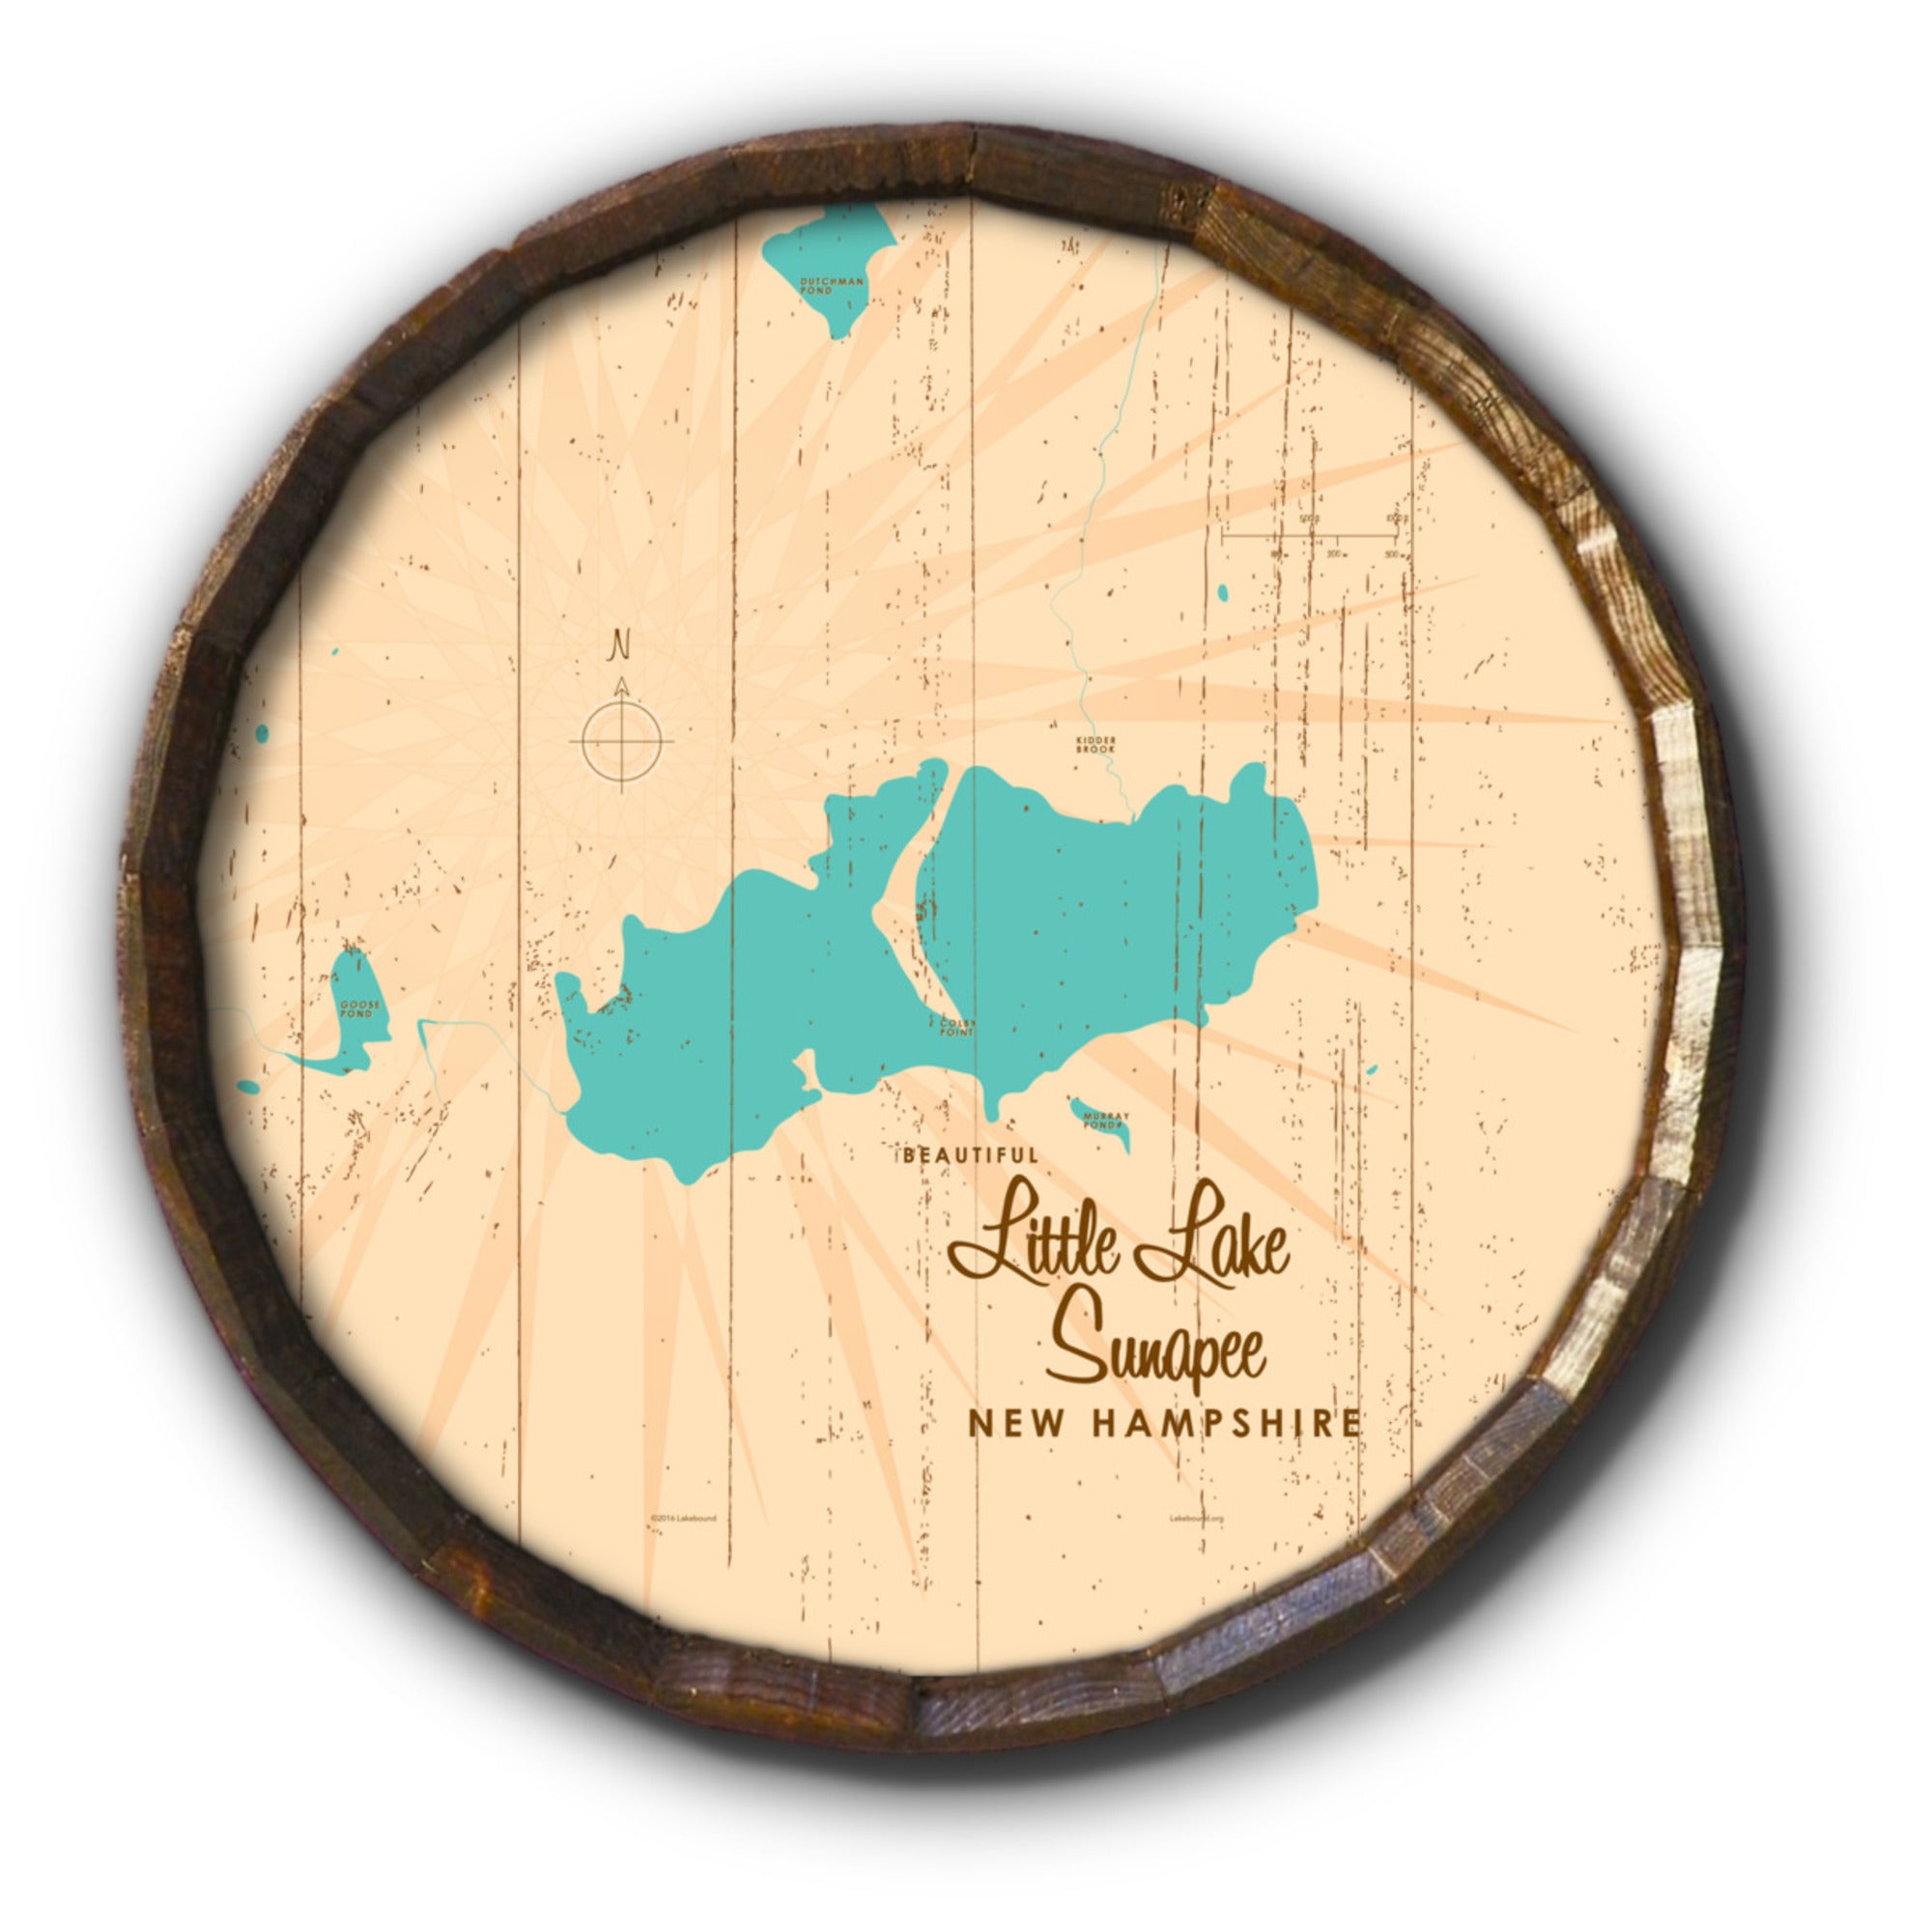 Little Lake Sunapee New Hampshire, Rustic Barrel End Map Art